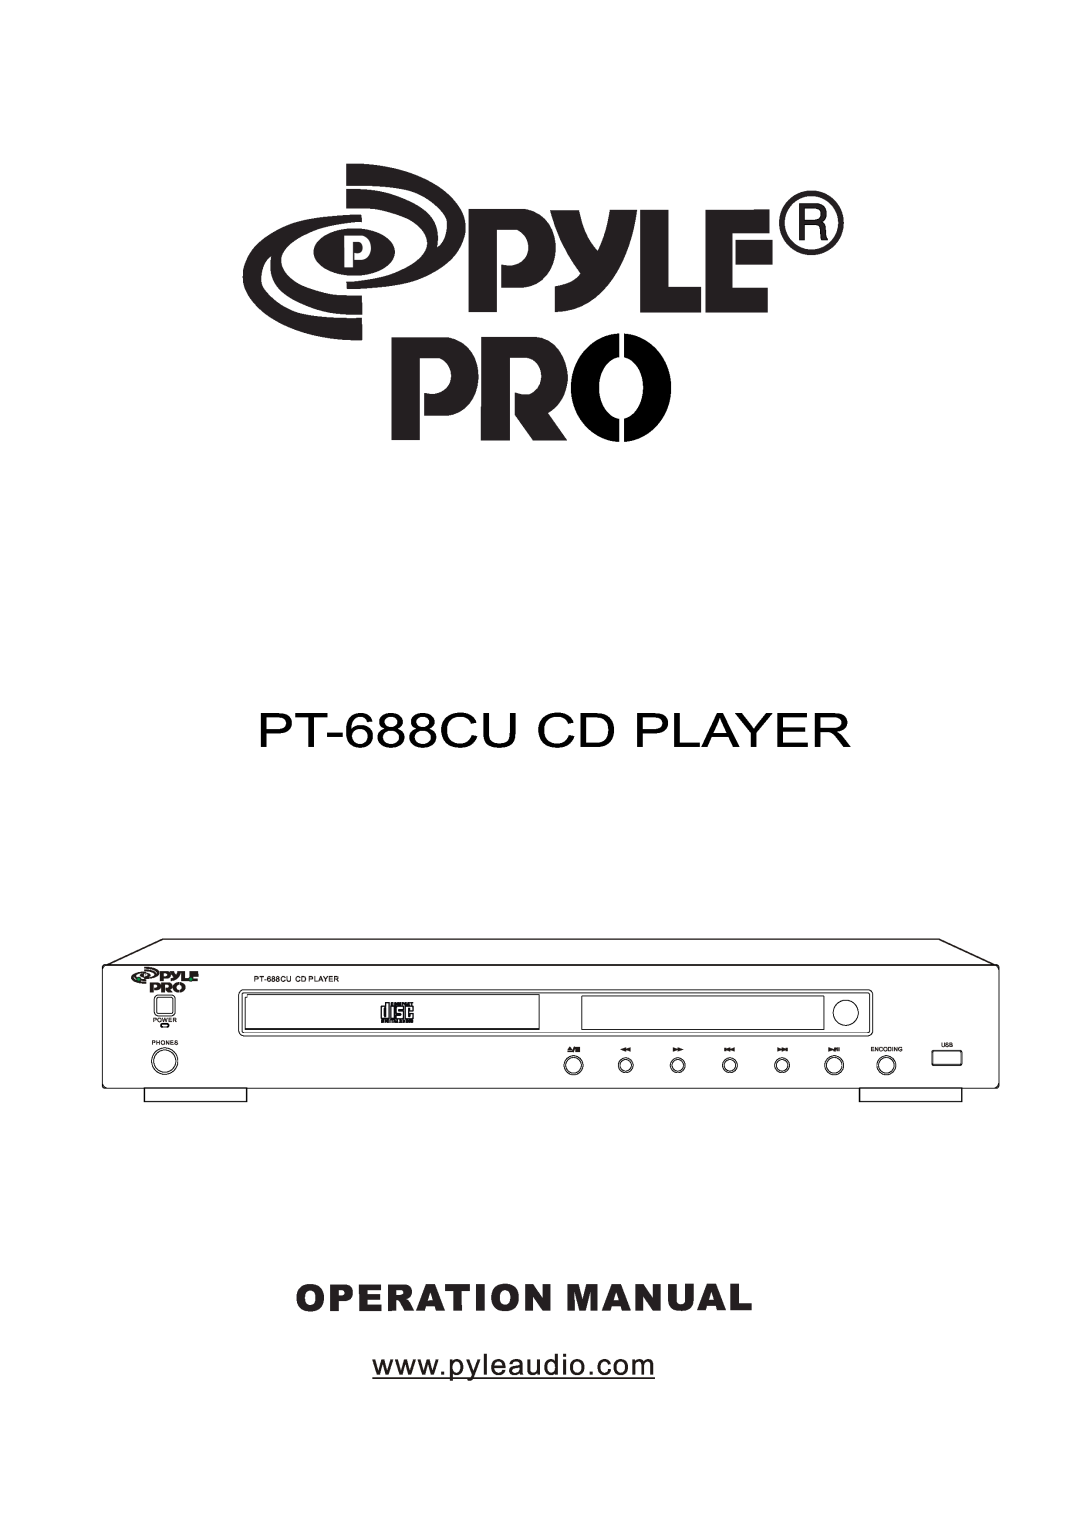 PYLE Audio manual PT-688CUCD PLAYER, Power, Phones, Encoding 